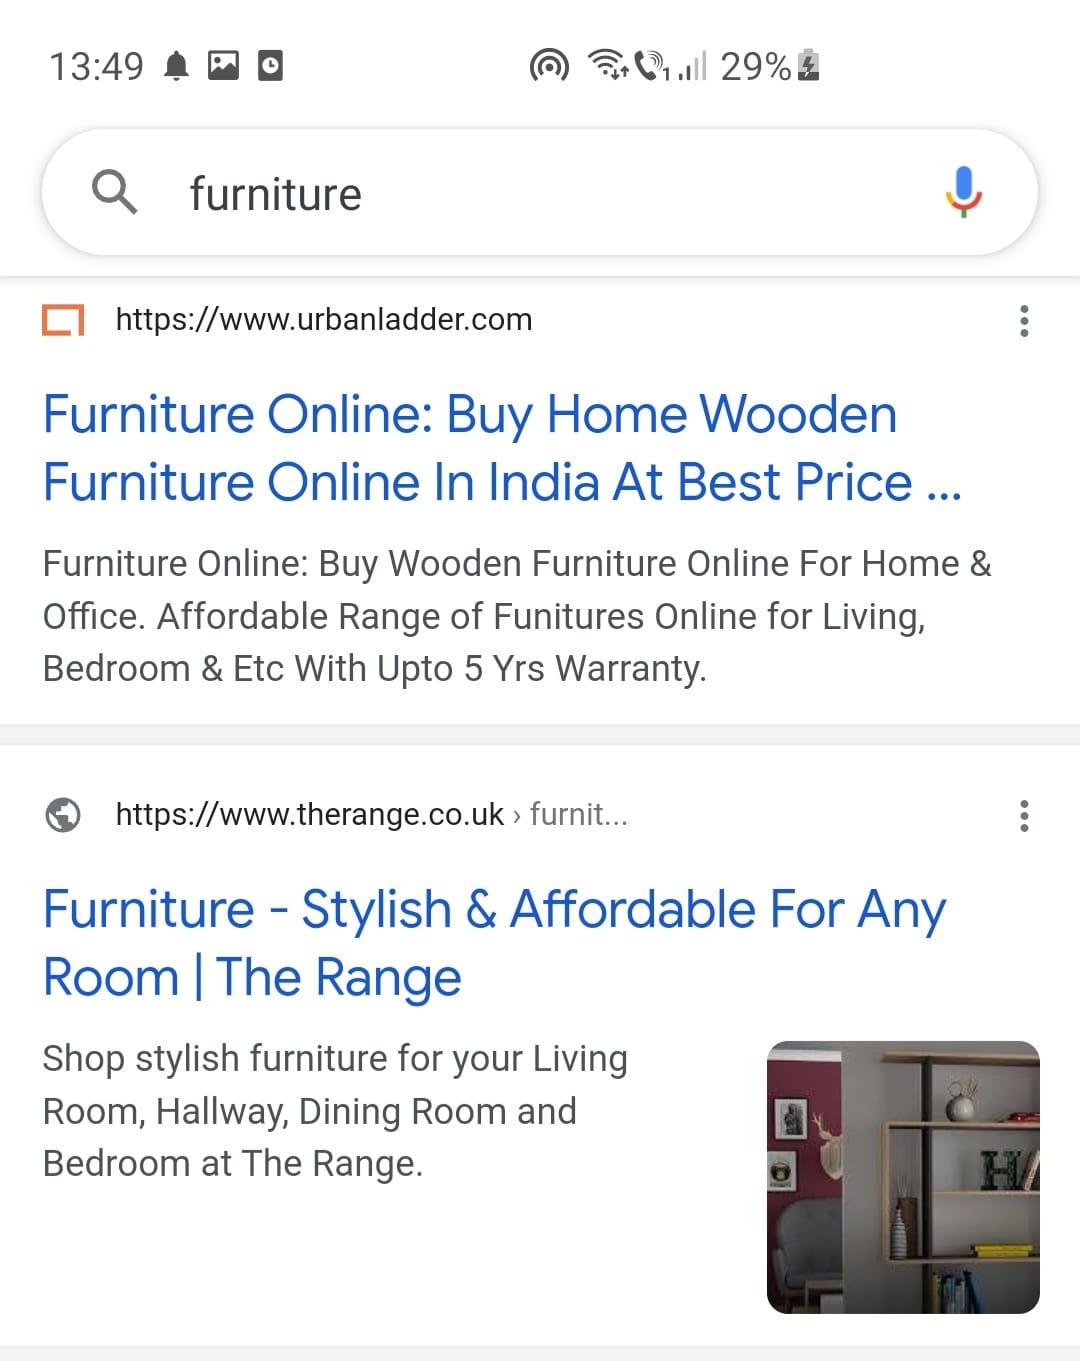 google ad example - furniture